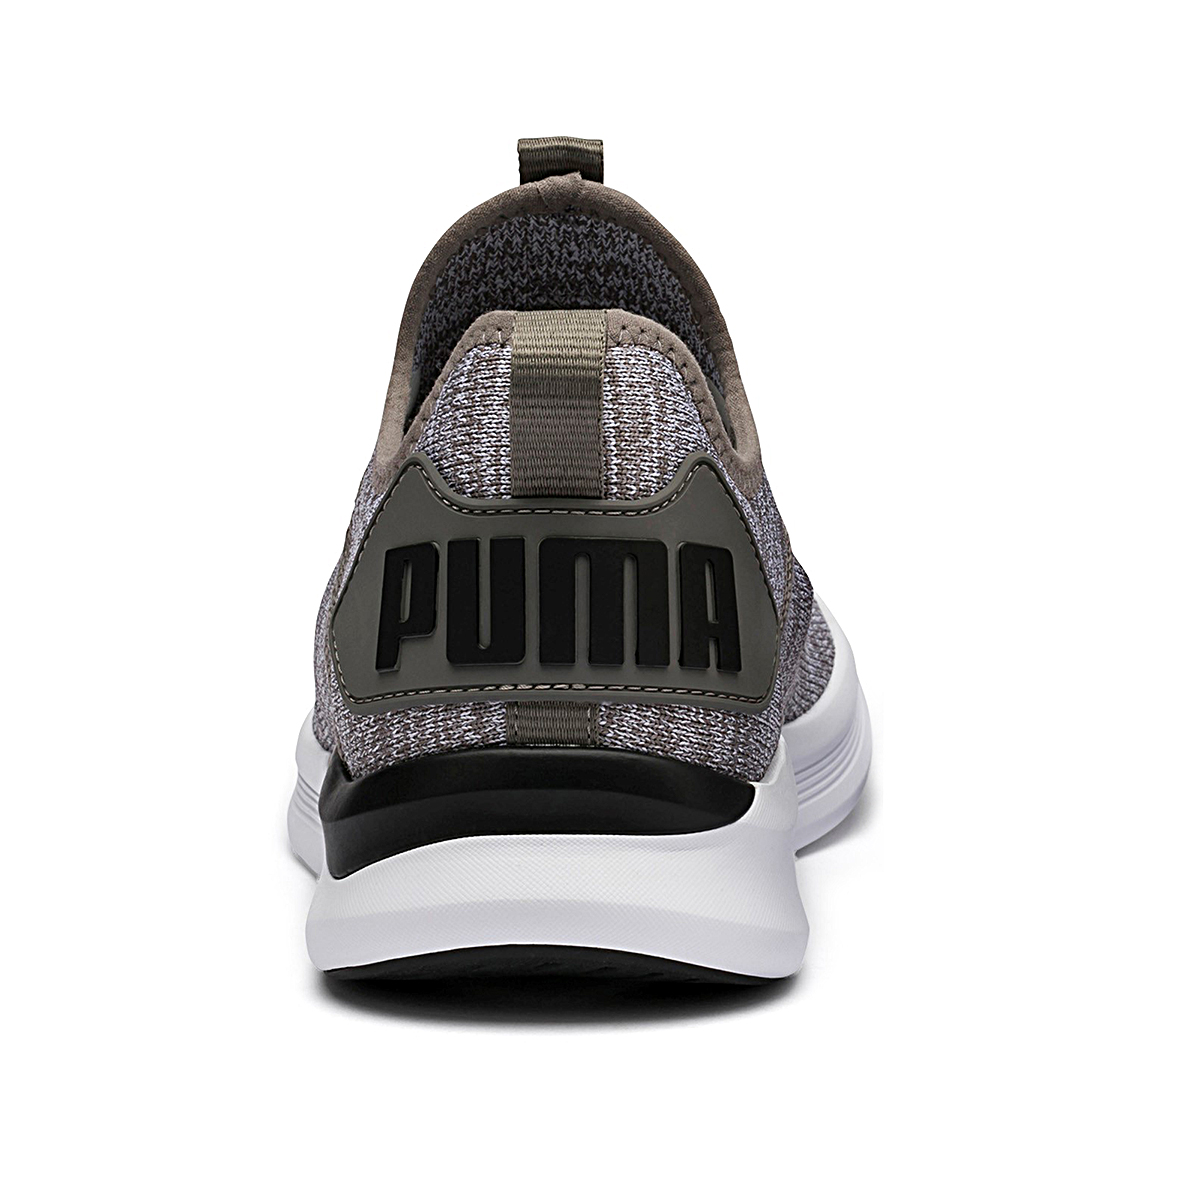 Puma Ignite Flash evoKNIT Joggingschuhe Herren Fitnessschuhe 190508 18